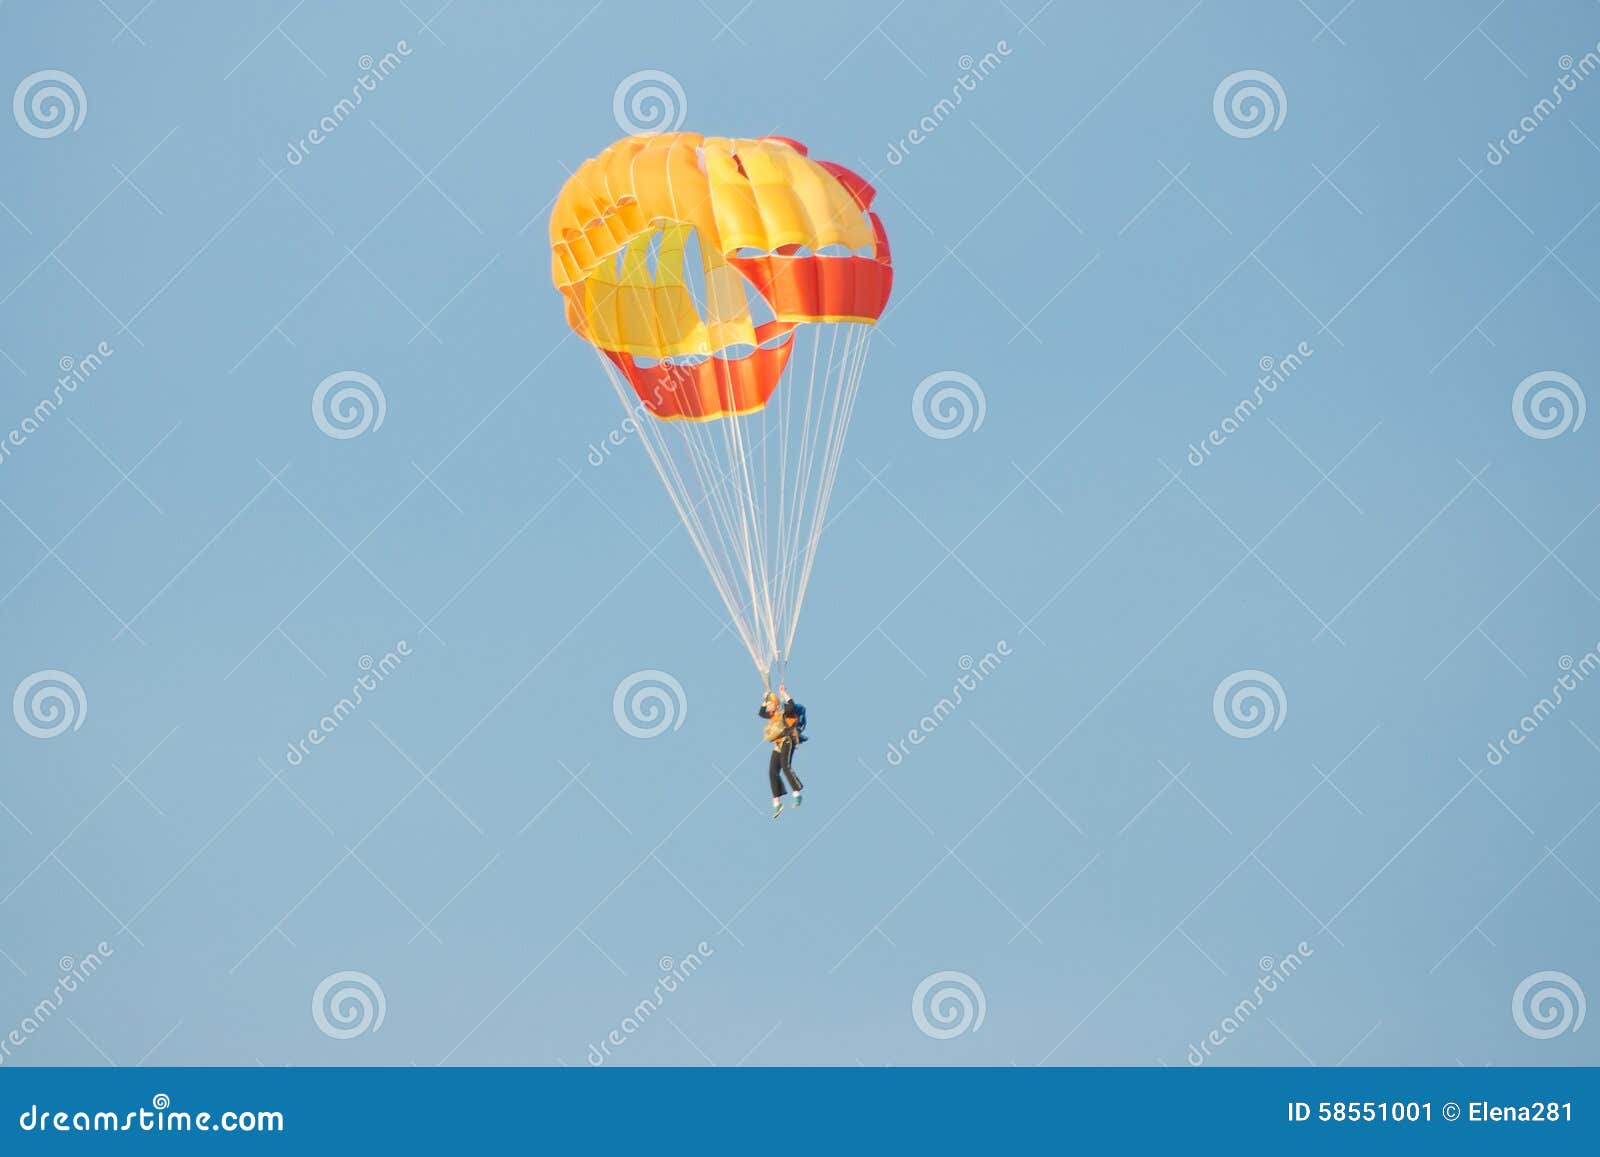 Parachutist In Bright Yellow Orange Parachute Parachute Stock Image